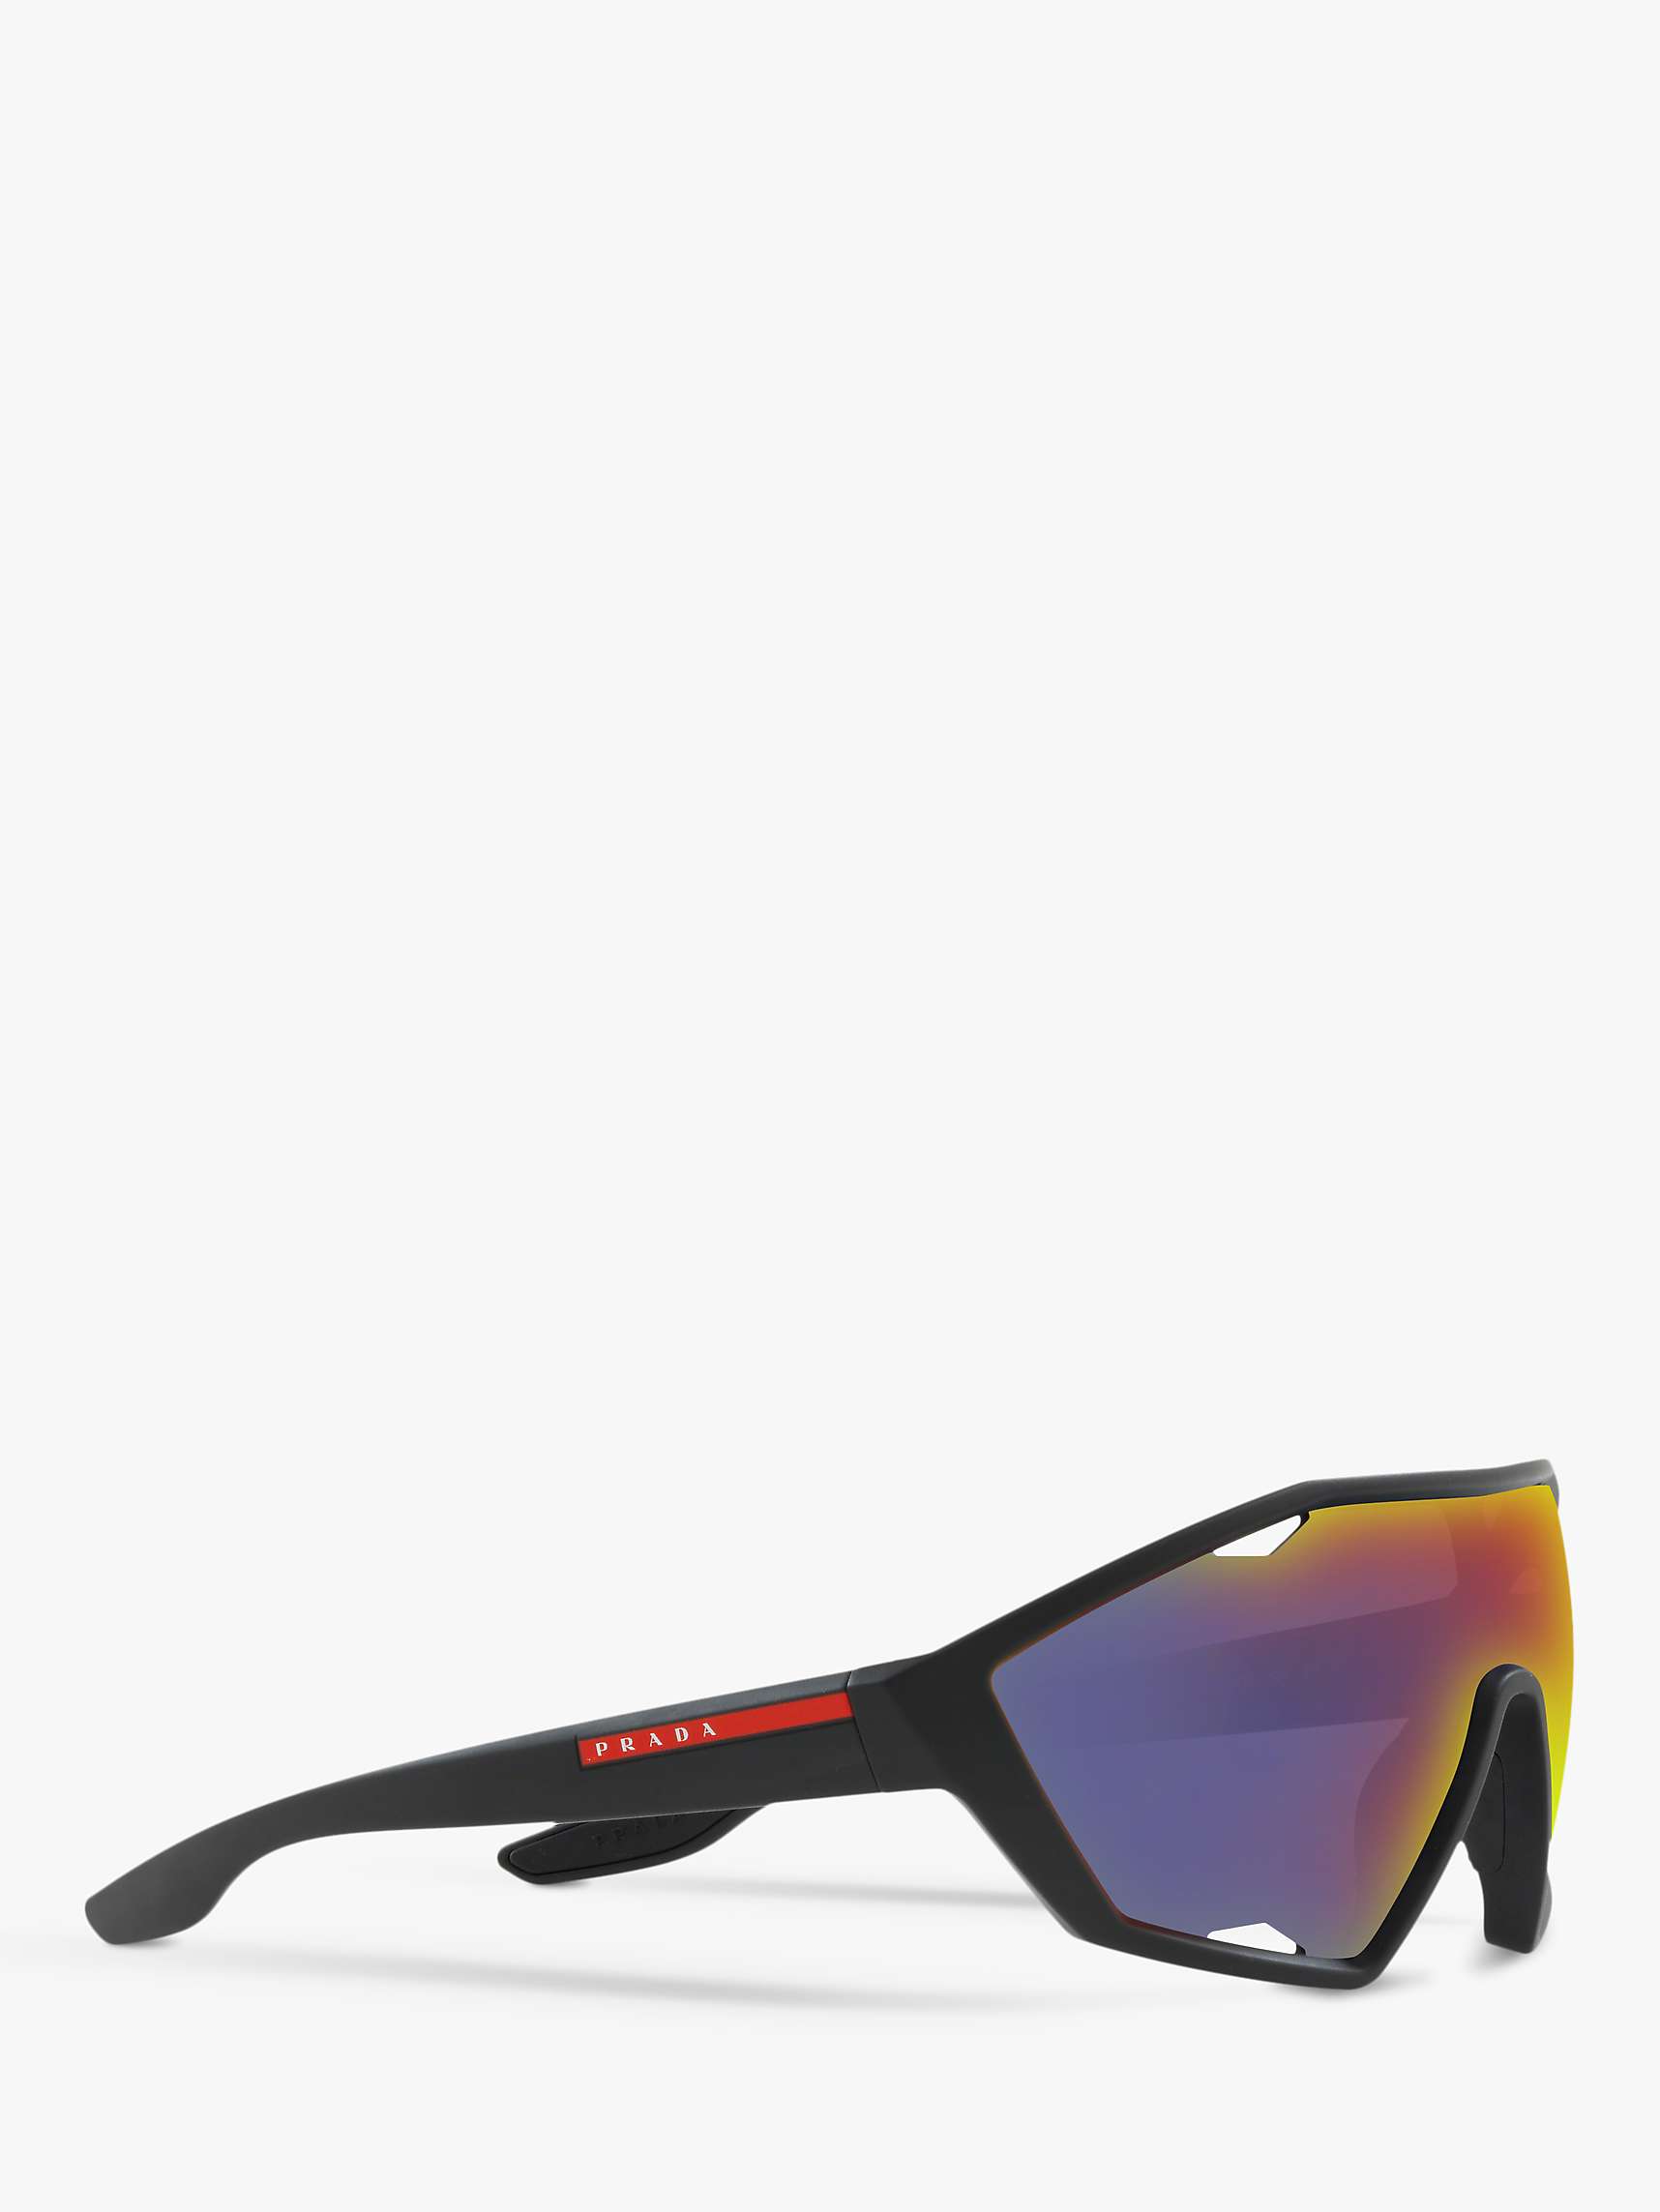 Prada PS 10US Men's Wrap Sunglasses, Black/Mirror Blue at John Lewis ...